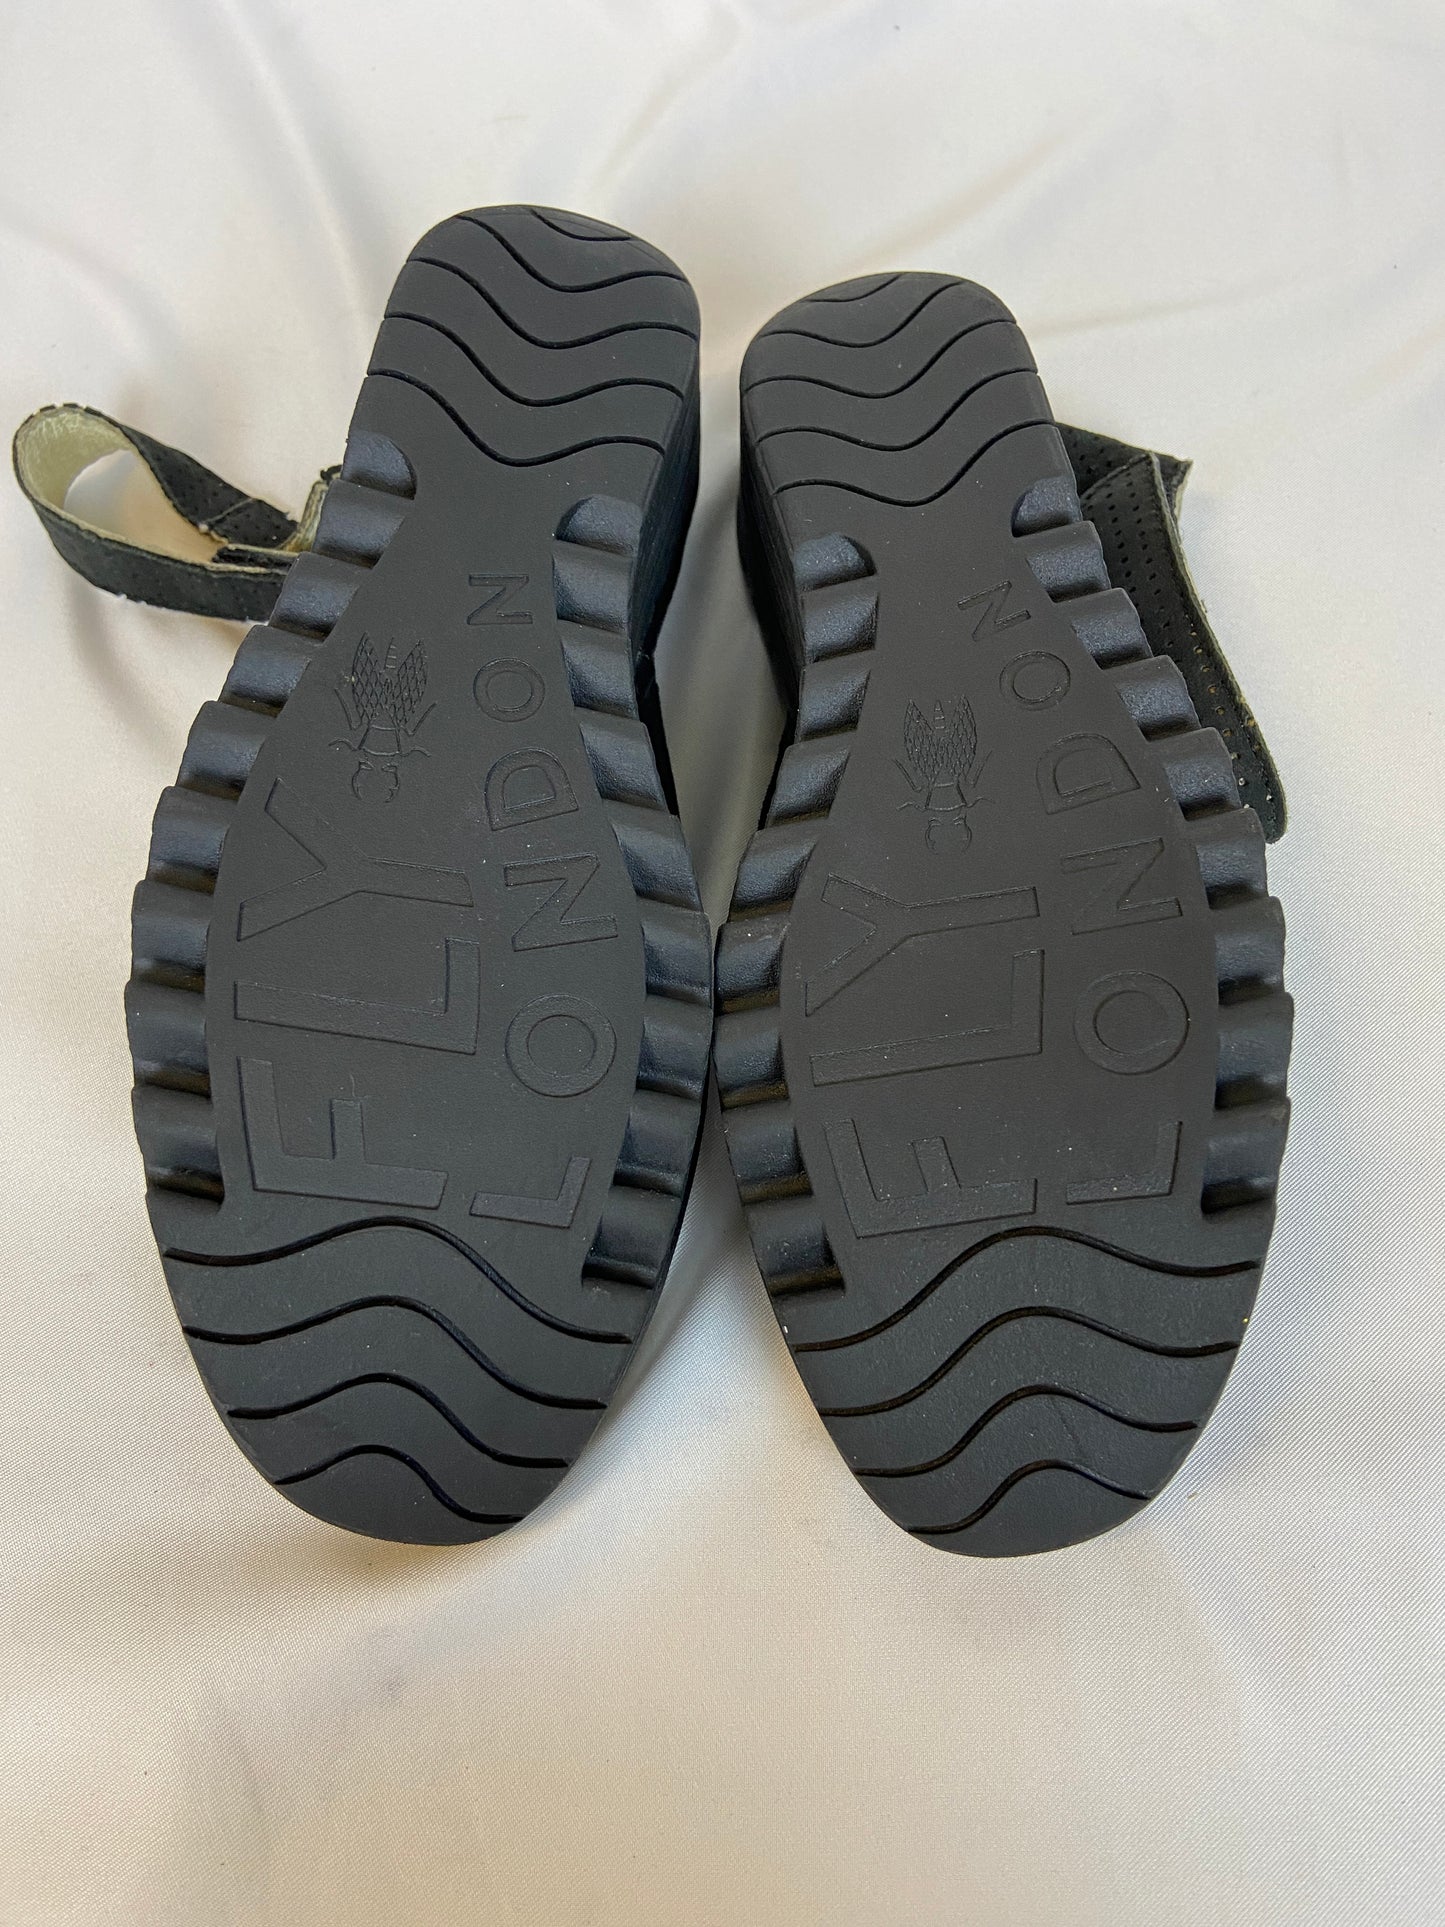 FLY London Size 9 Women's Black Wedge Sandal